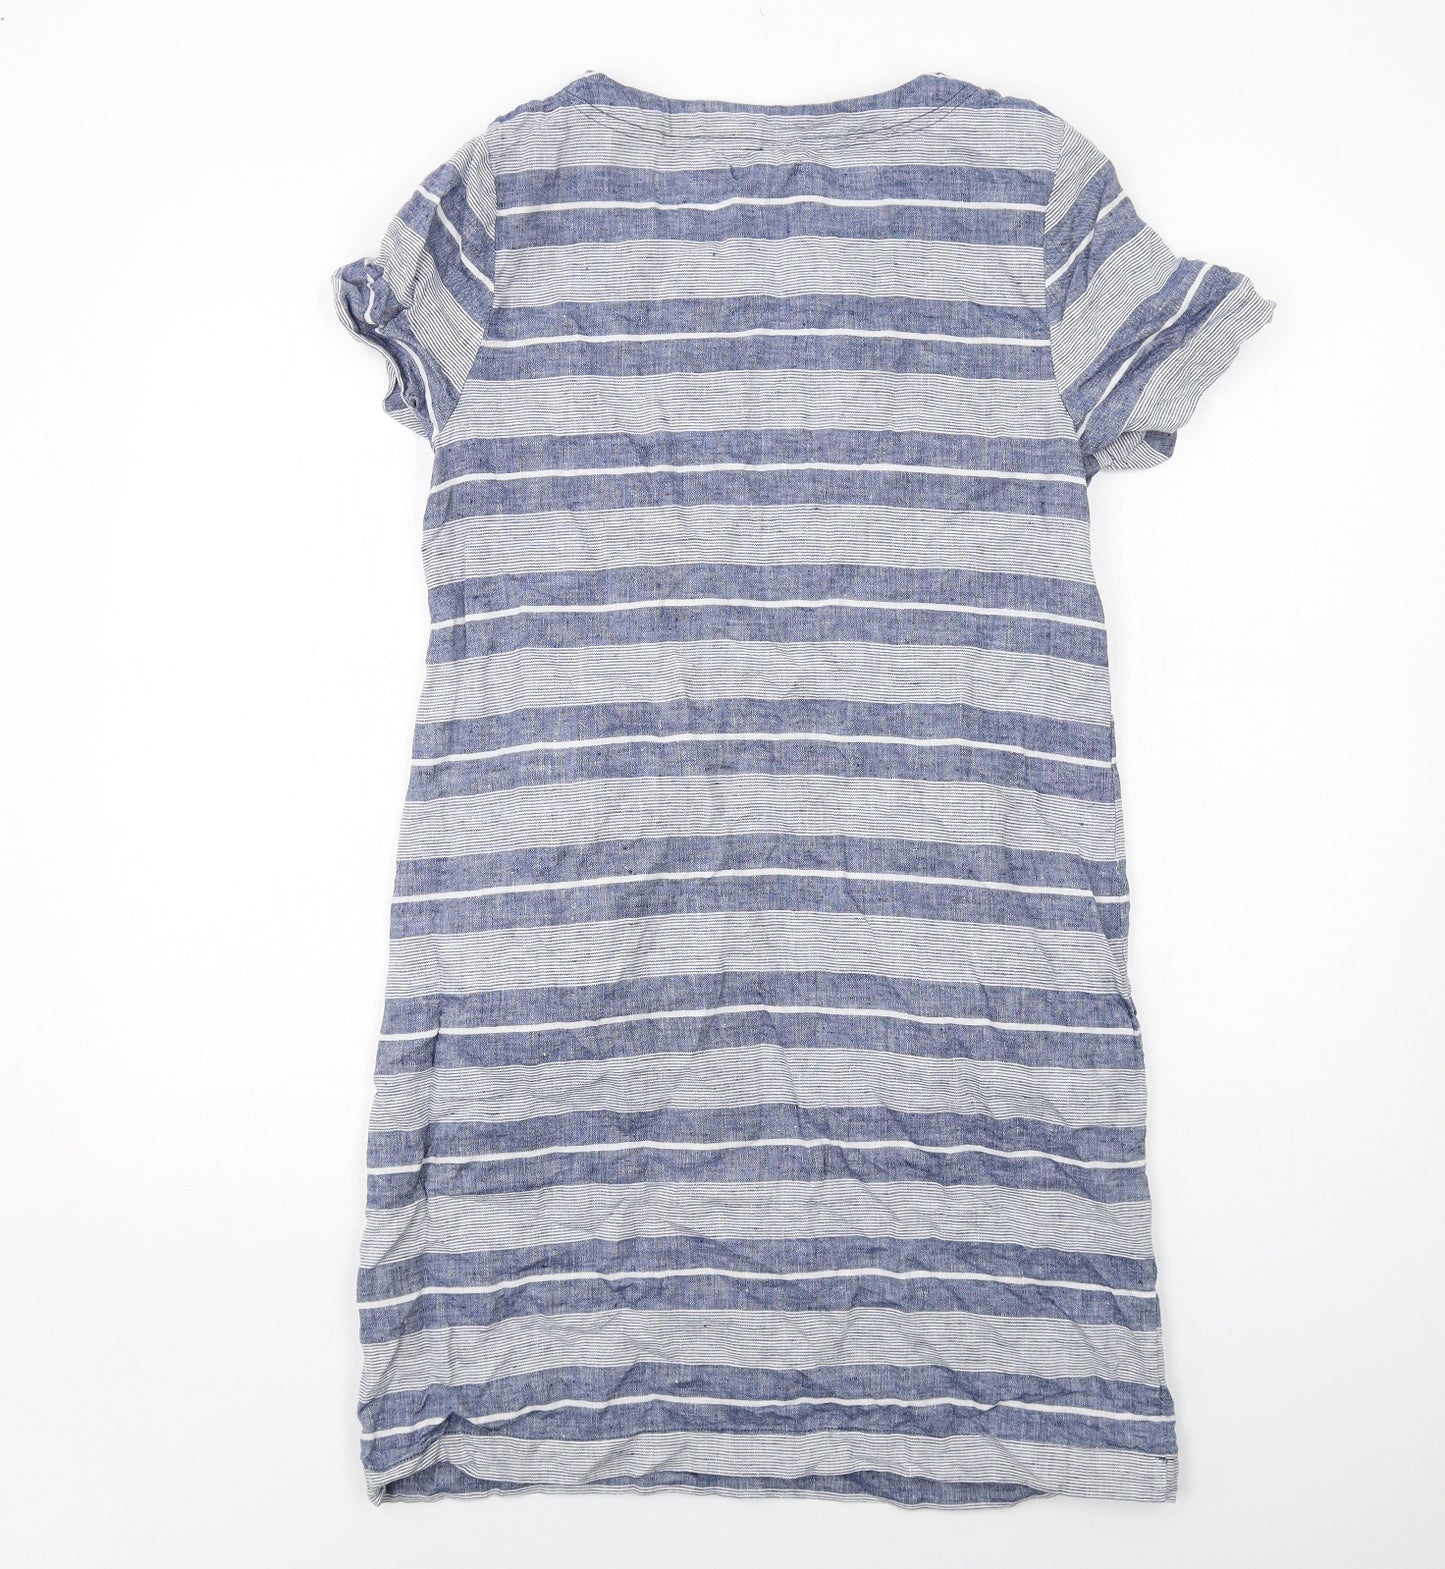 White Stuff Womens Blue Striped Linen T-Shirt Dress Size 12 V-Neck Pullover